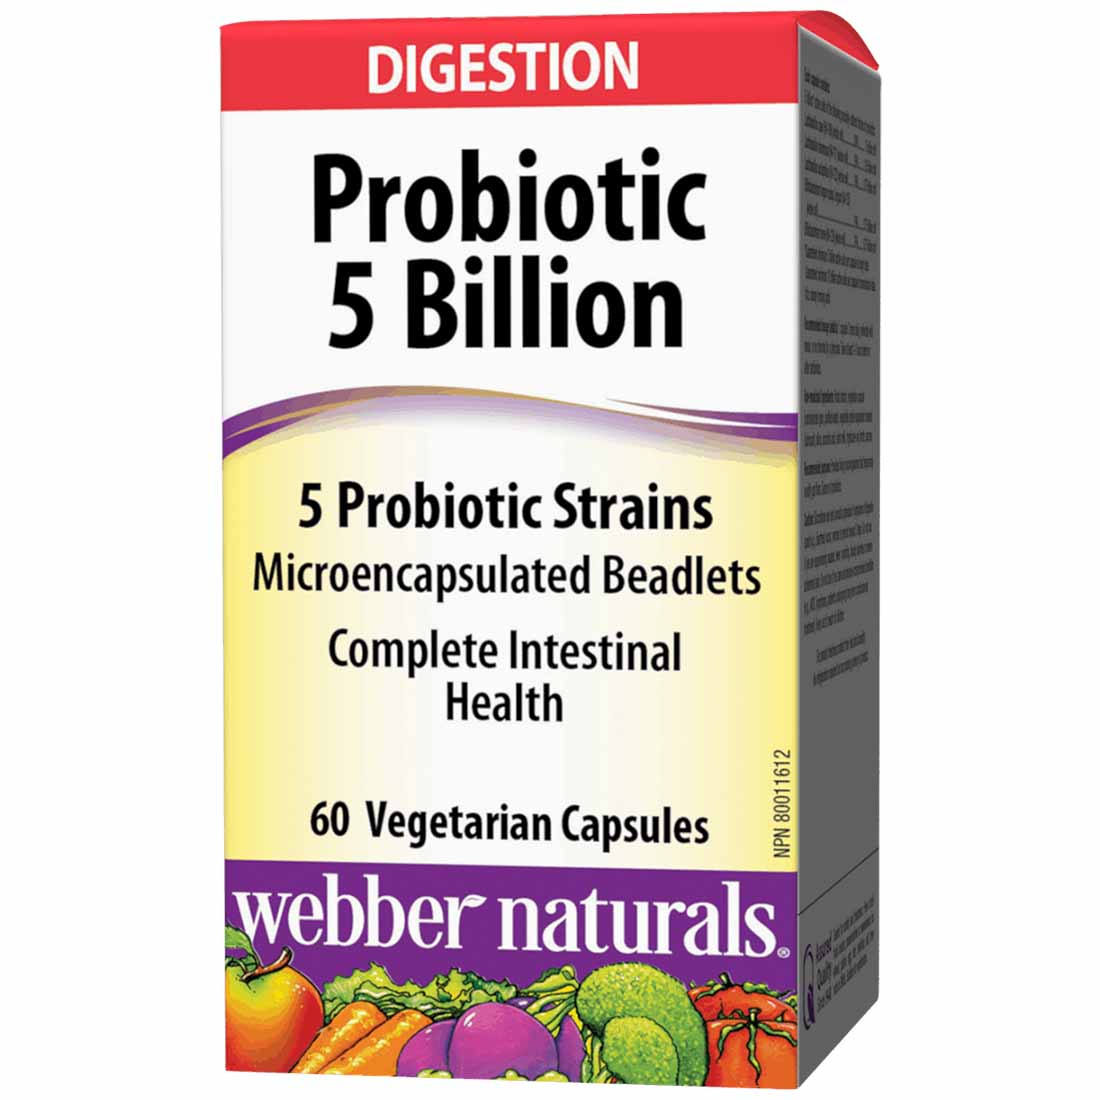 Webber Naturals Probiotic Multi Strain, 5 Billion Active Cells, 5 Probiotic Strains, 60 Vegetarian Capsules